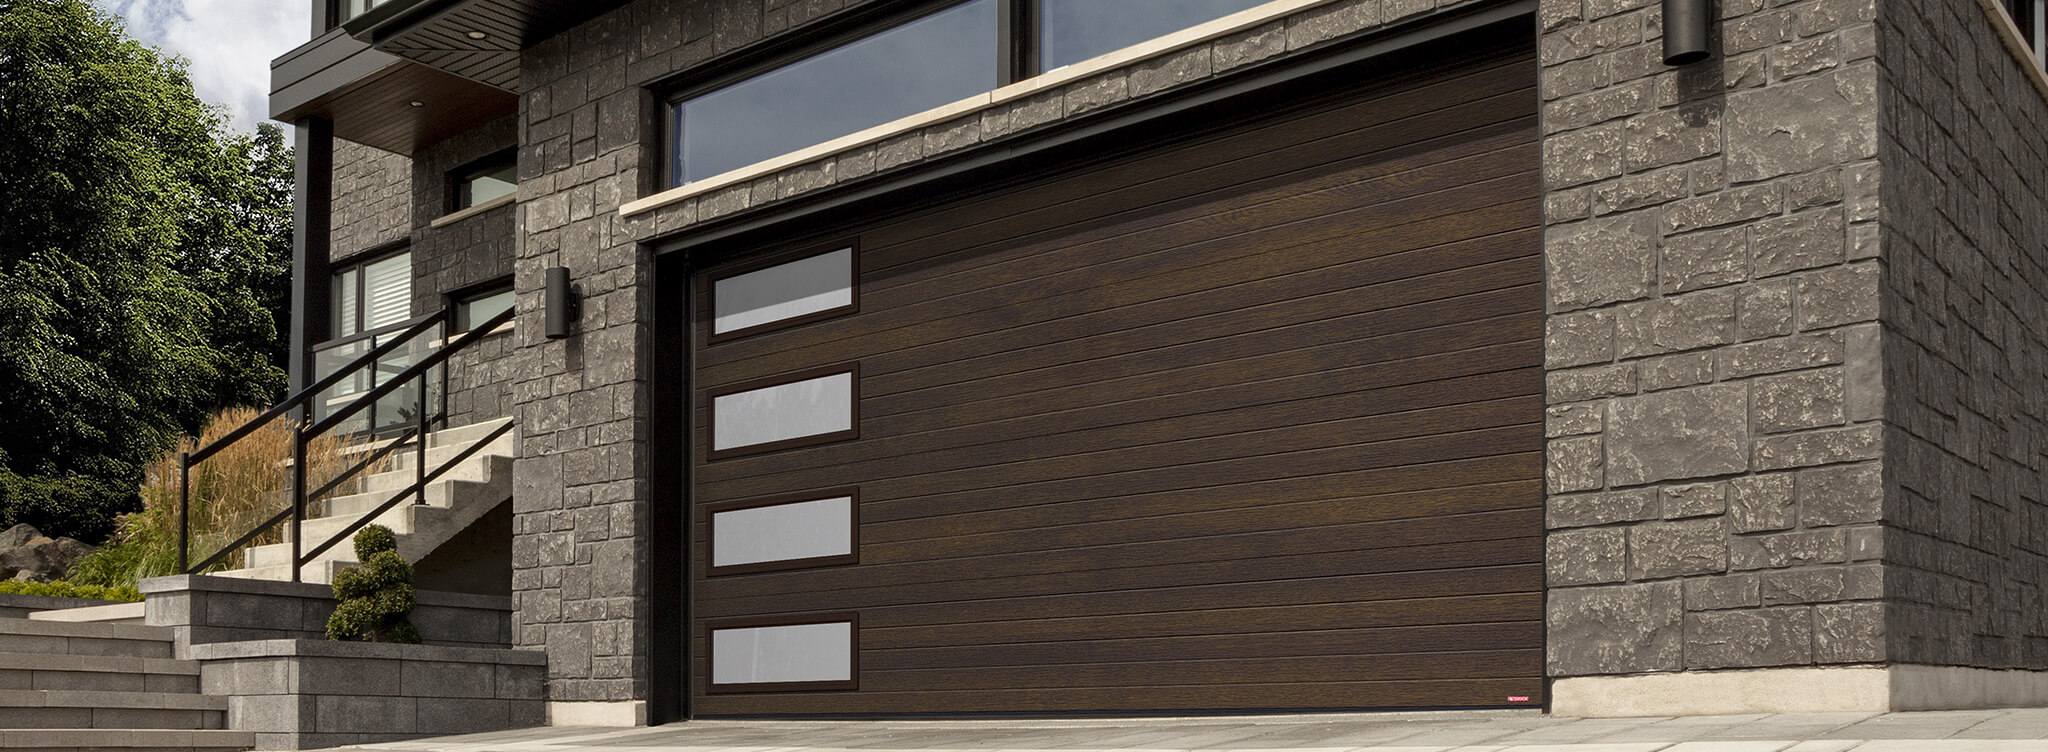 Standard+ Moderno Multi, 16' x 8', Chocolate Walnut, window layout: Left-side Harmony